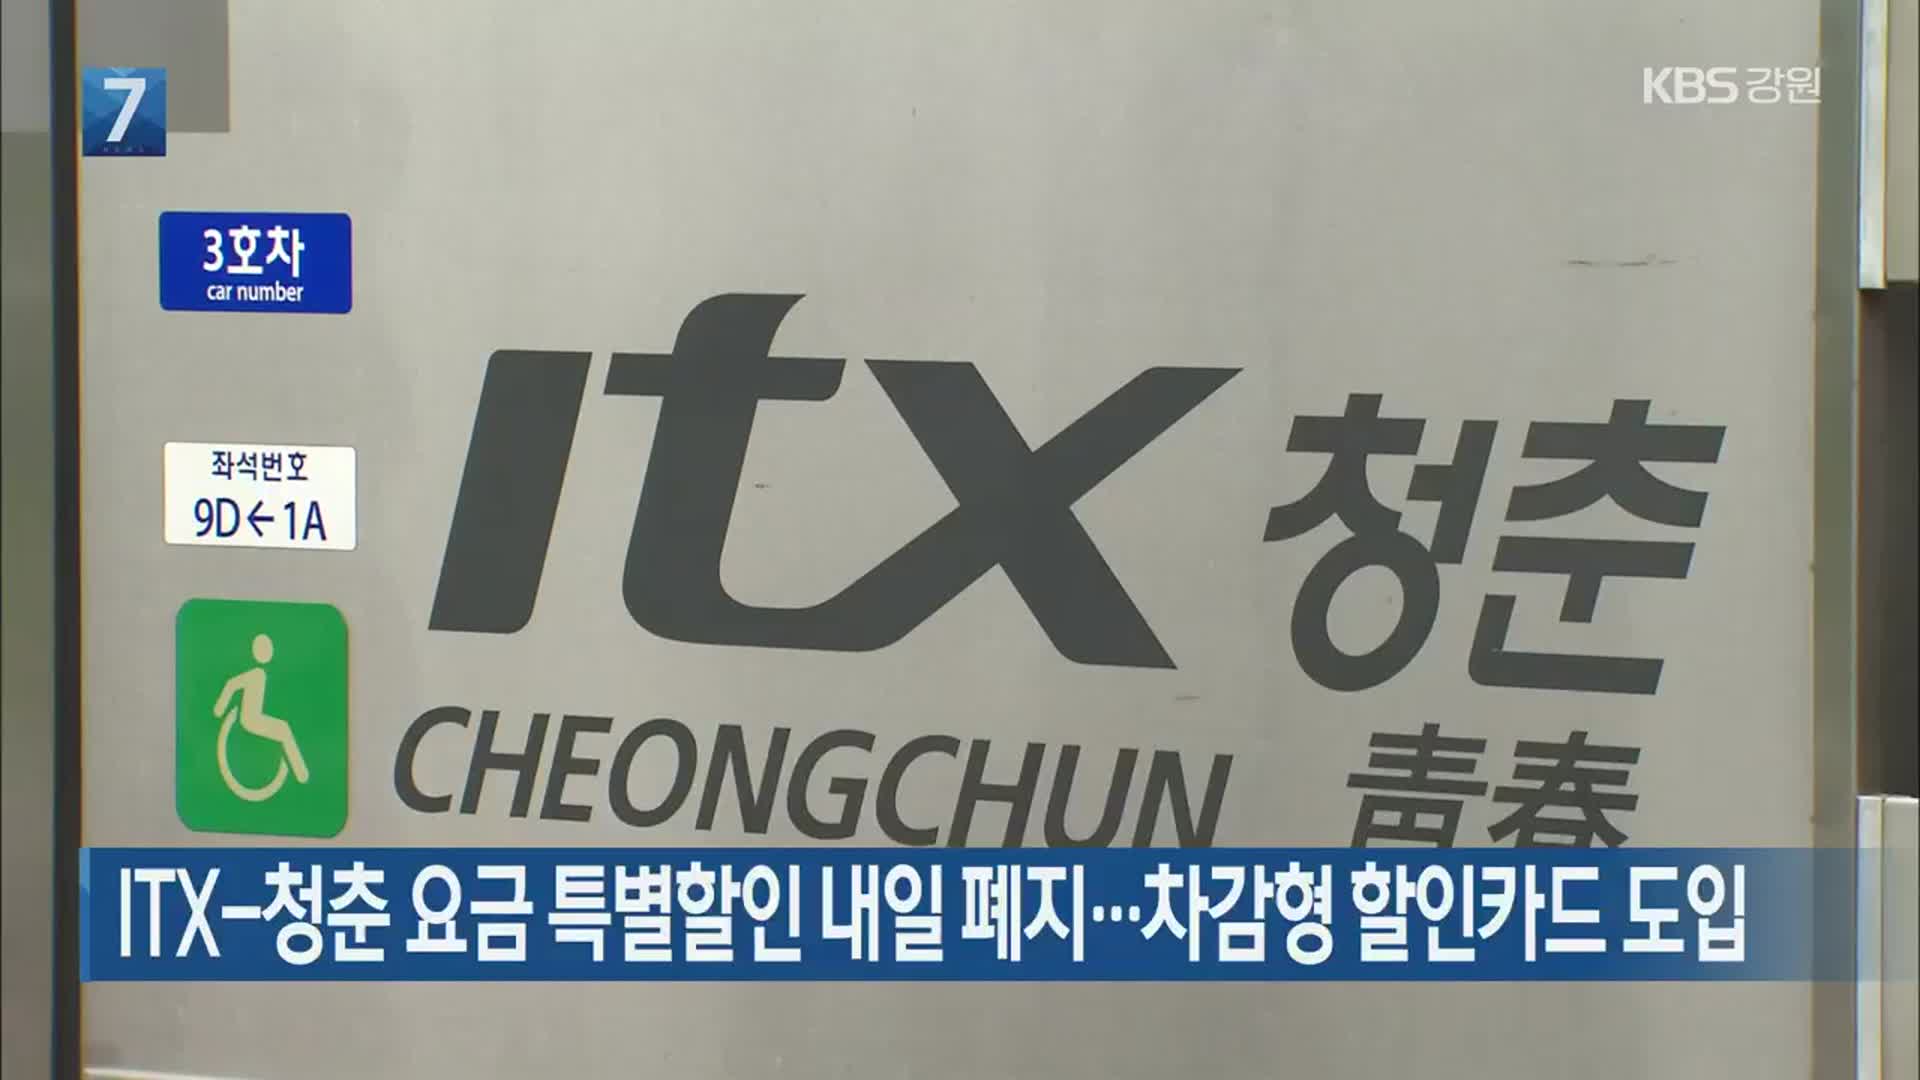 ITX-청춘 요금 특별할인 내일 폐지…차감형 할인카드 도입